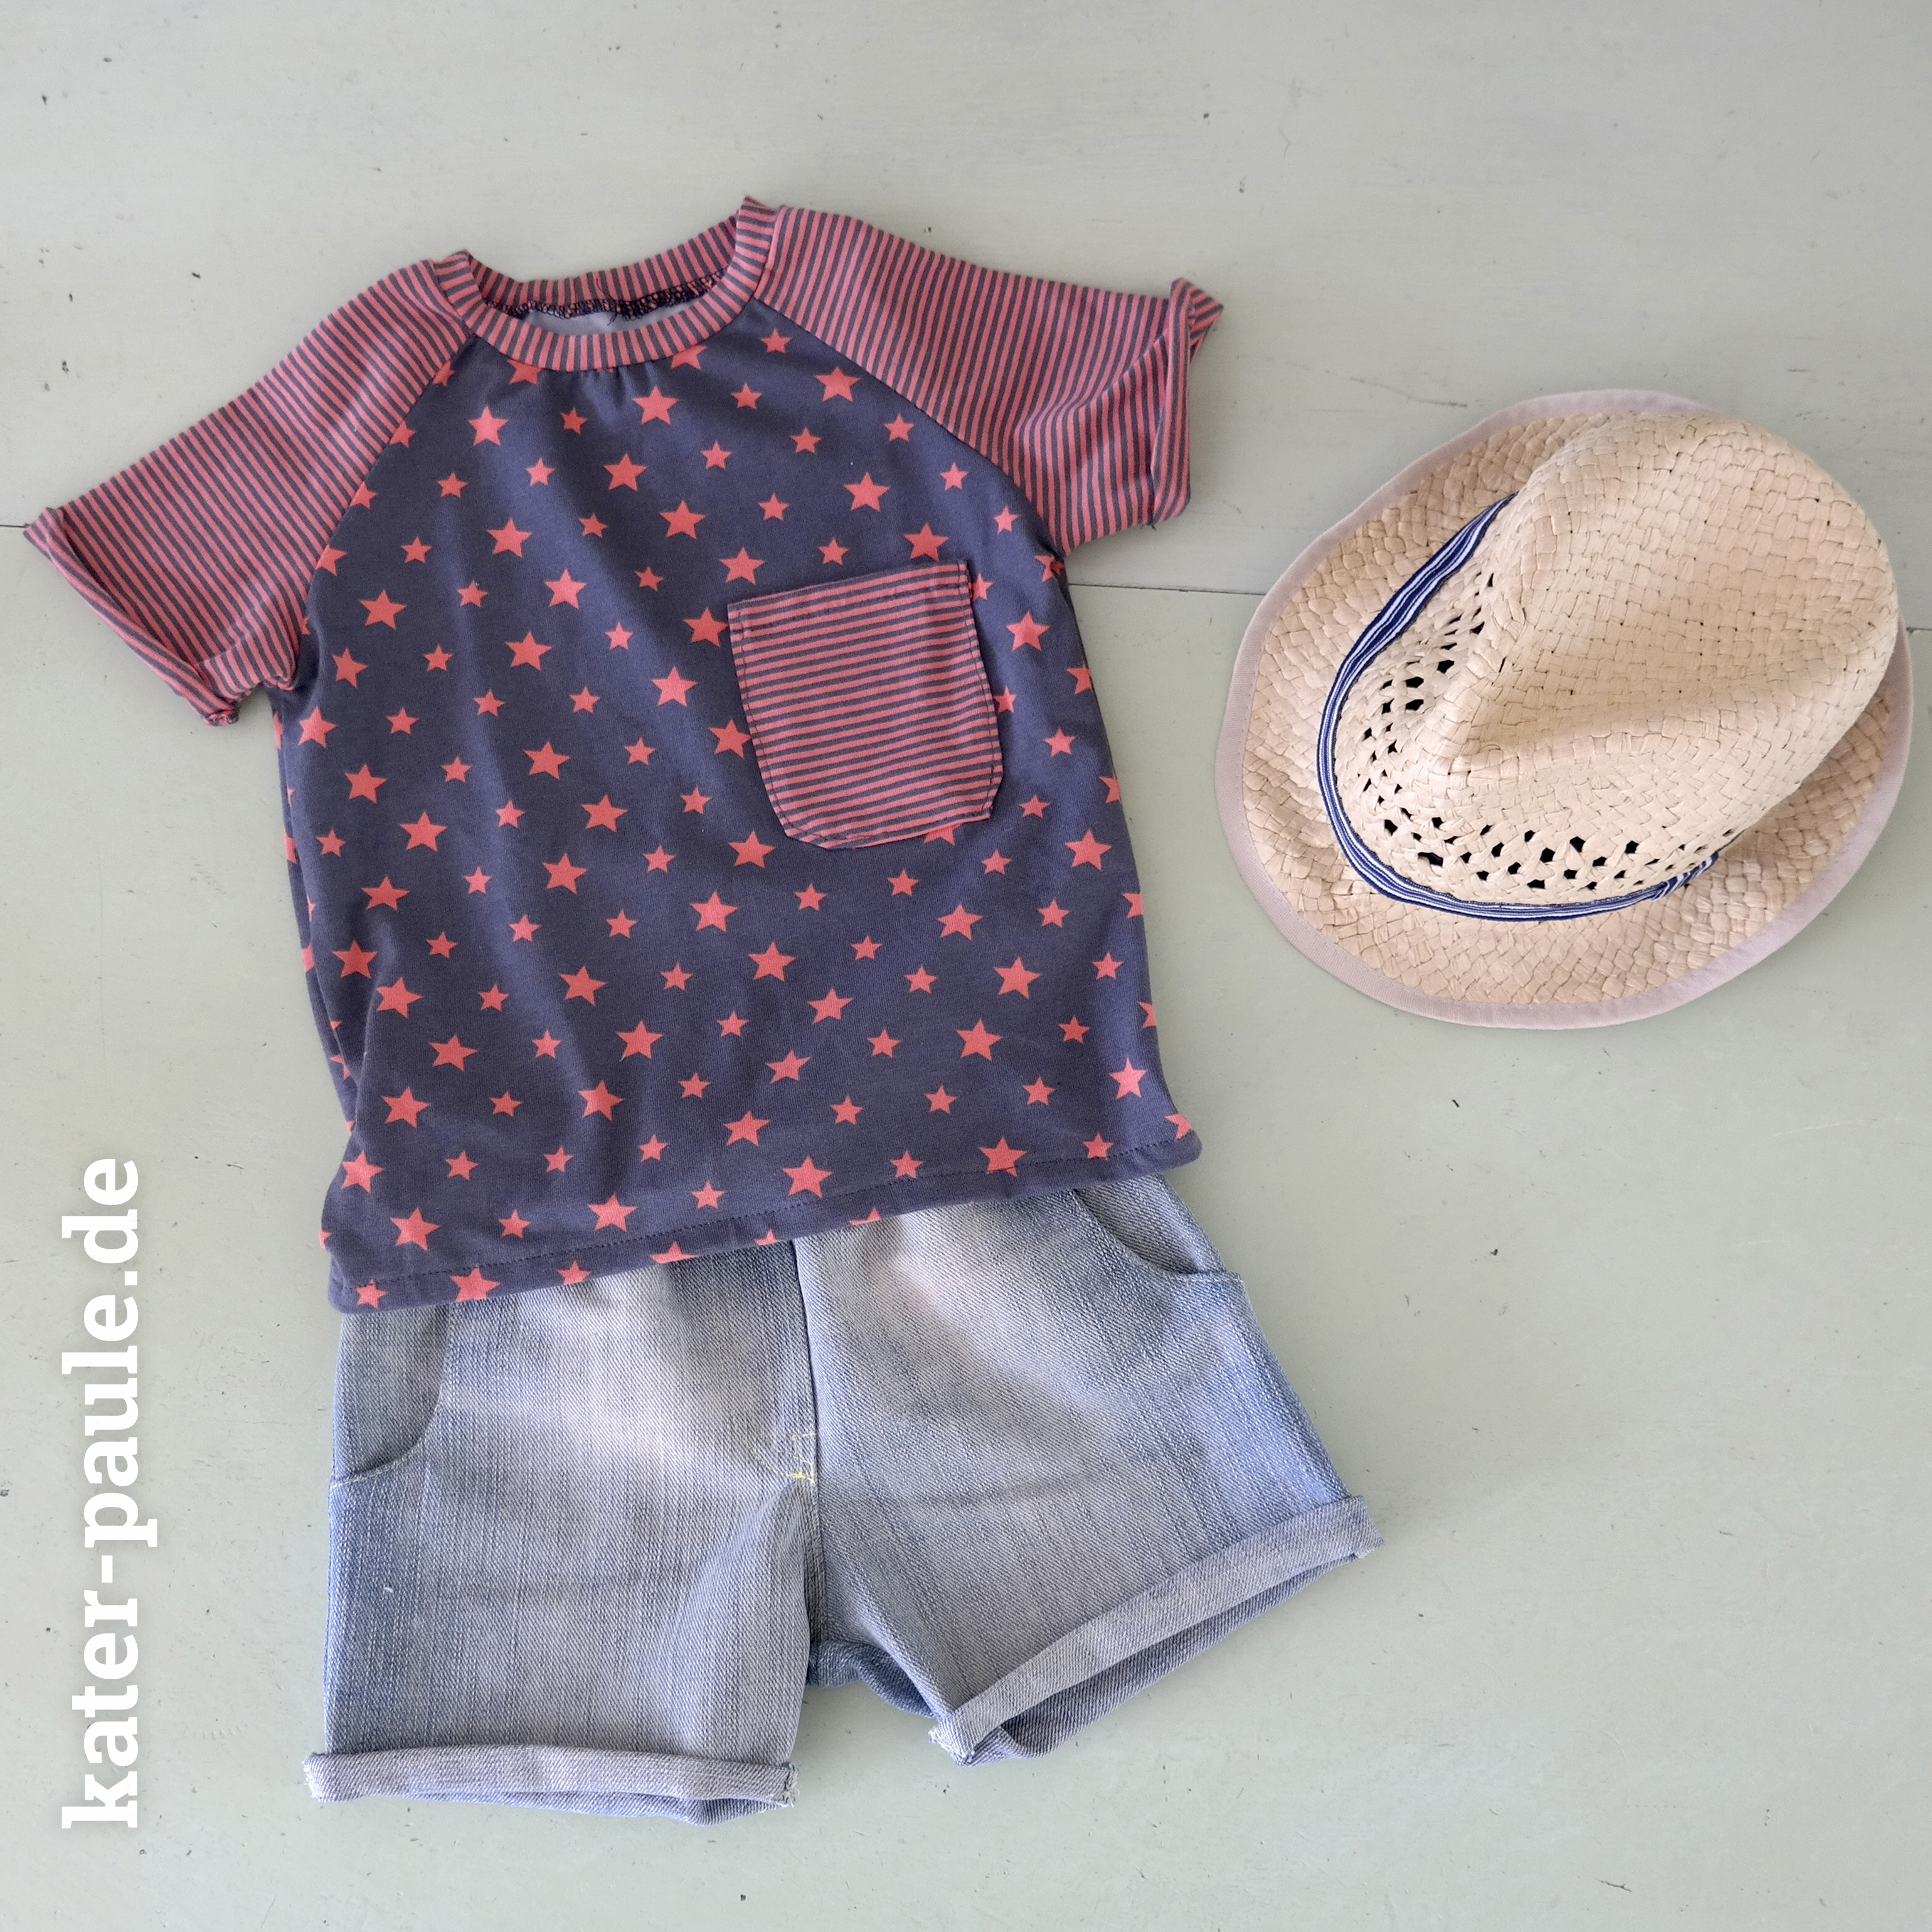 EmJo Summer Set / Shorts + T-Shirt / Sterne / Streifen / Jeans / Jersey / Kater Paule / Nähgedöns